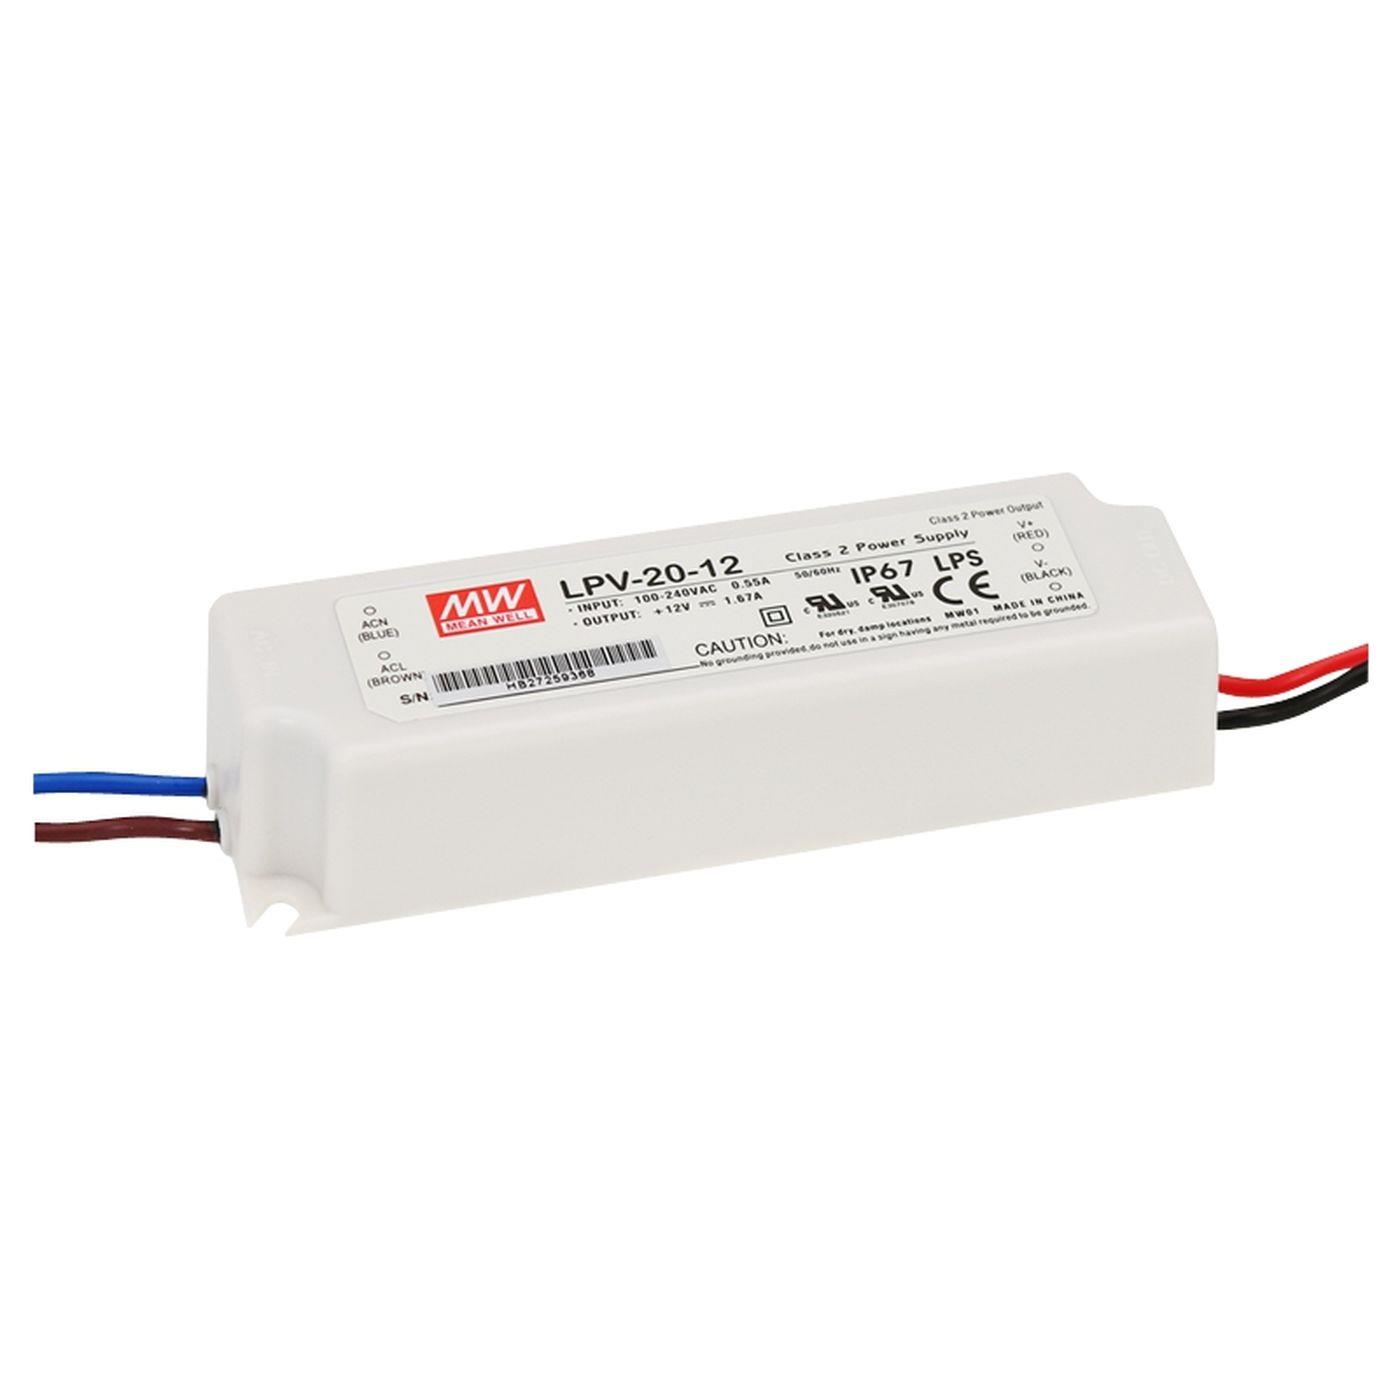 LPV-20-24 20W 24V 0,84A LED power supply Transformer Driver IP67